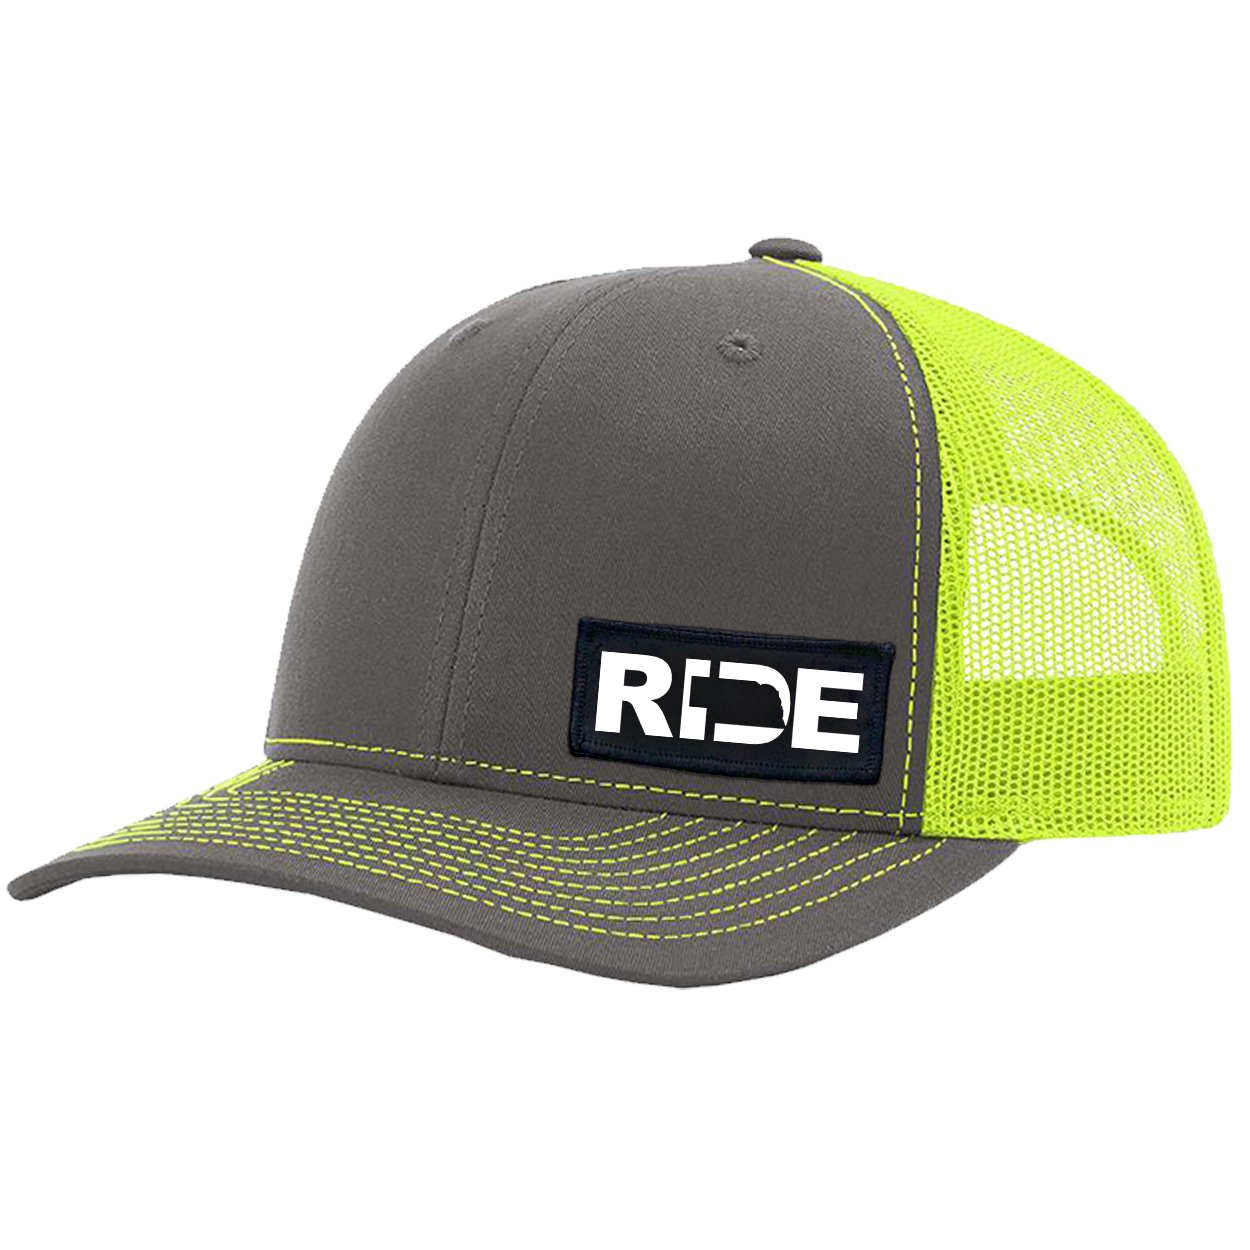 Ride Nebraska Night Out Woven Patch Snapback Trucker Hat Charcoal/Neon Yellow (White Logo)